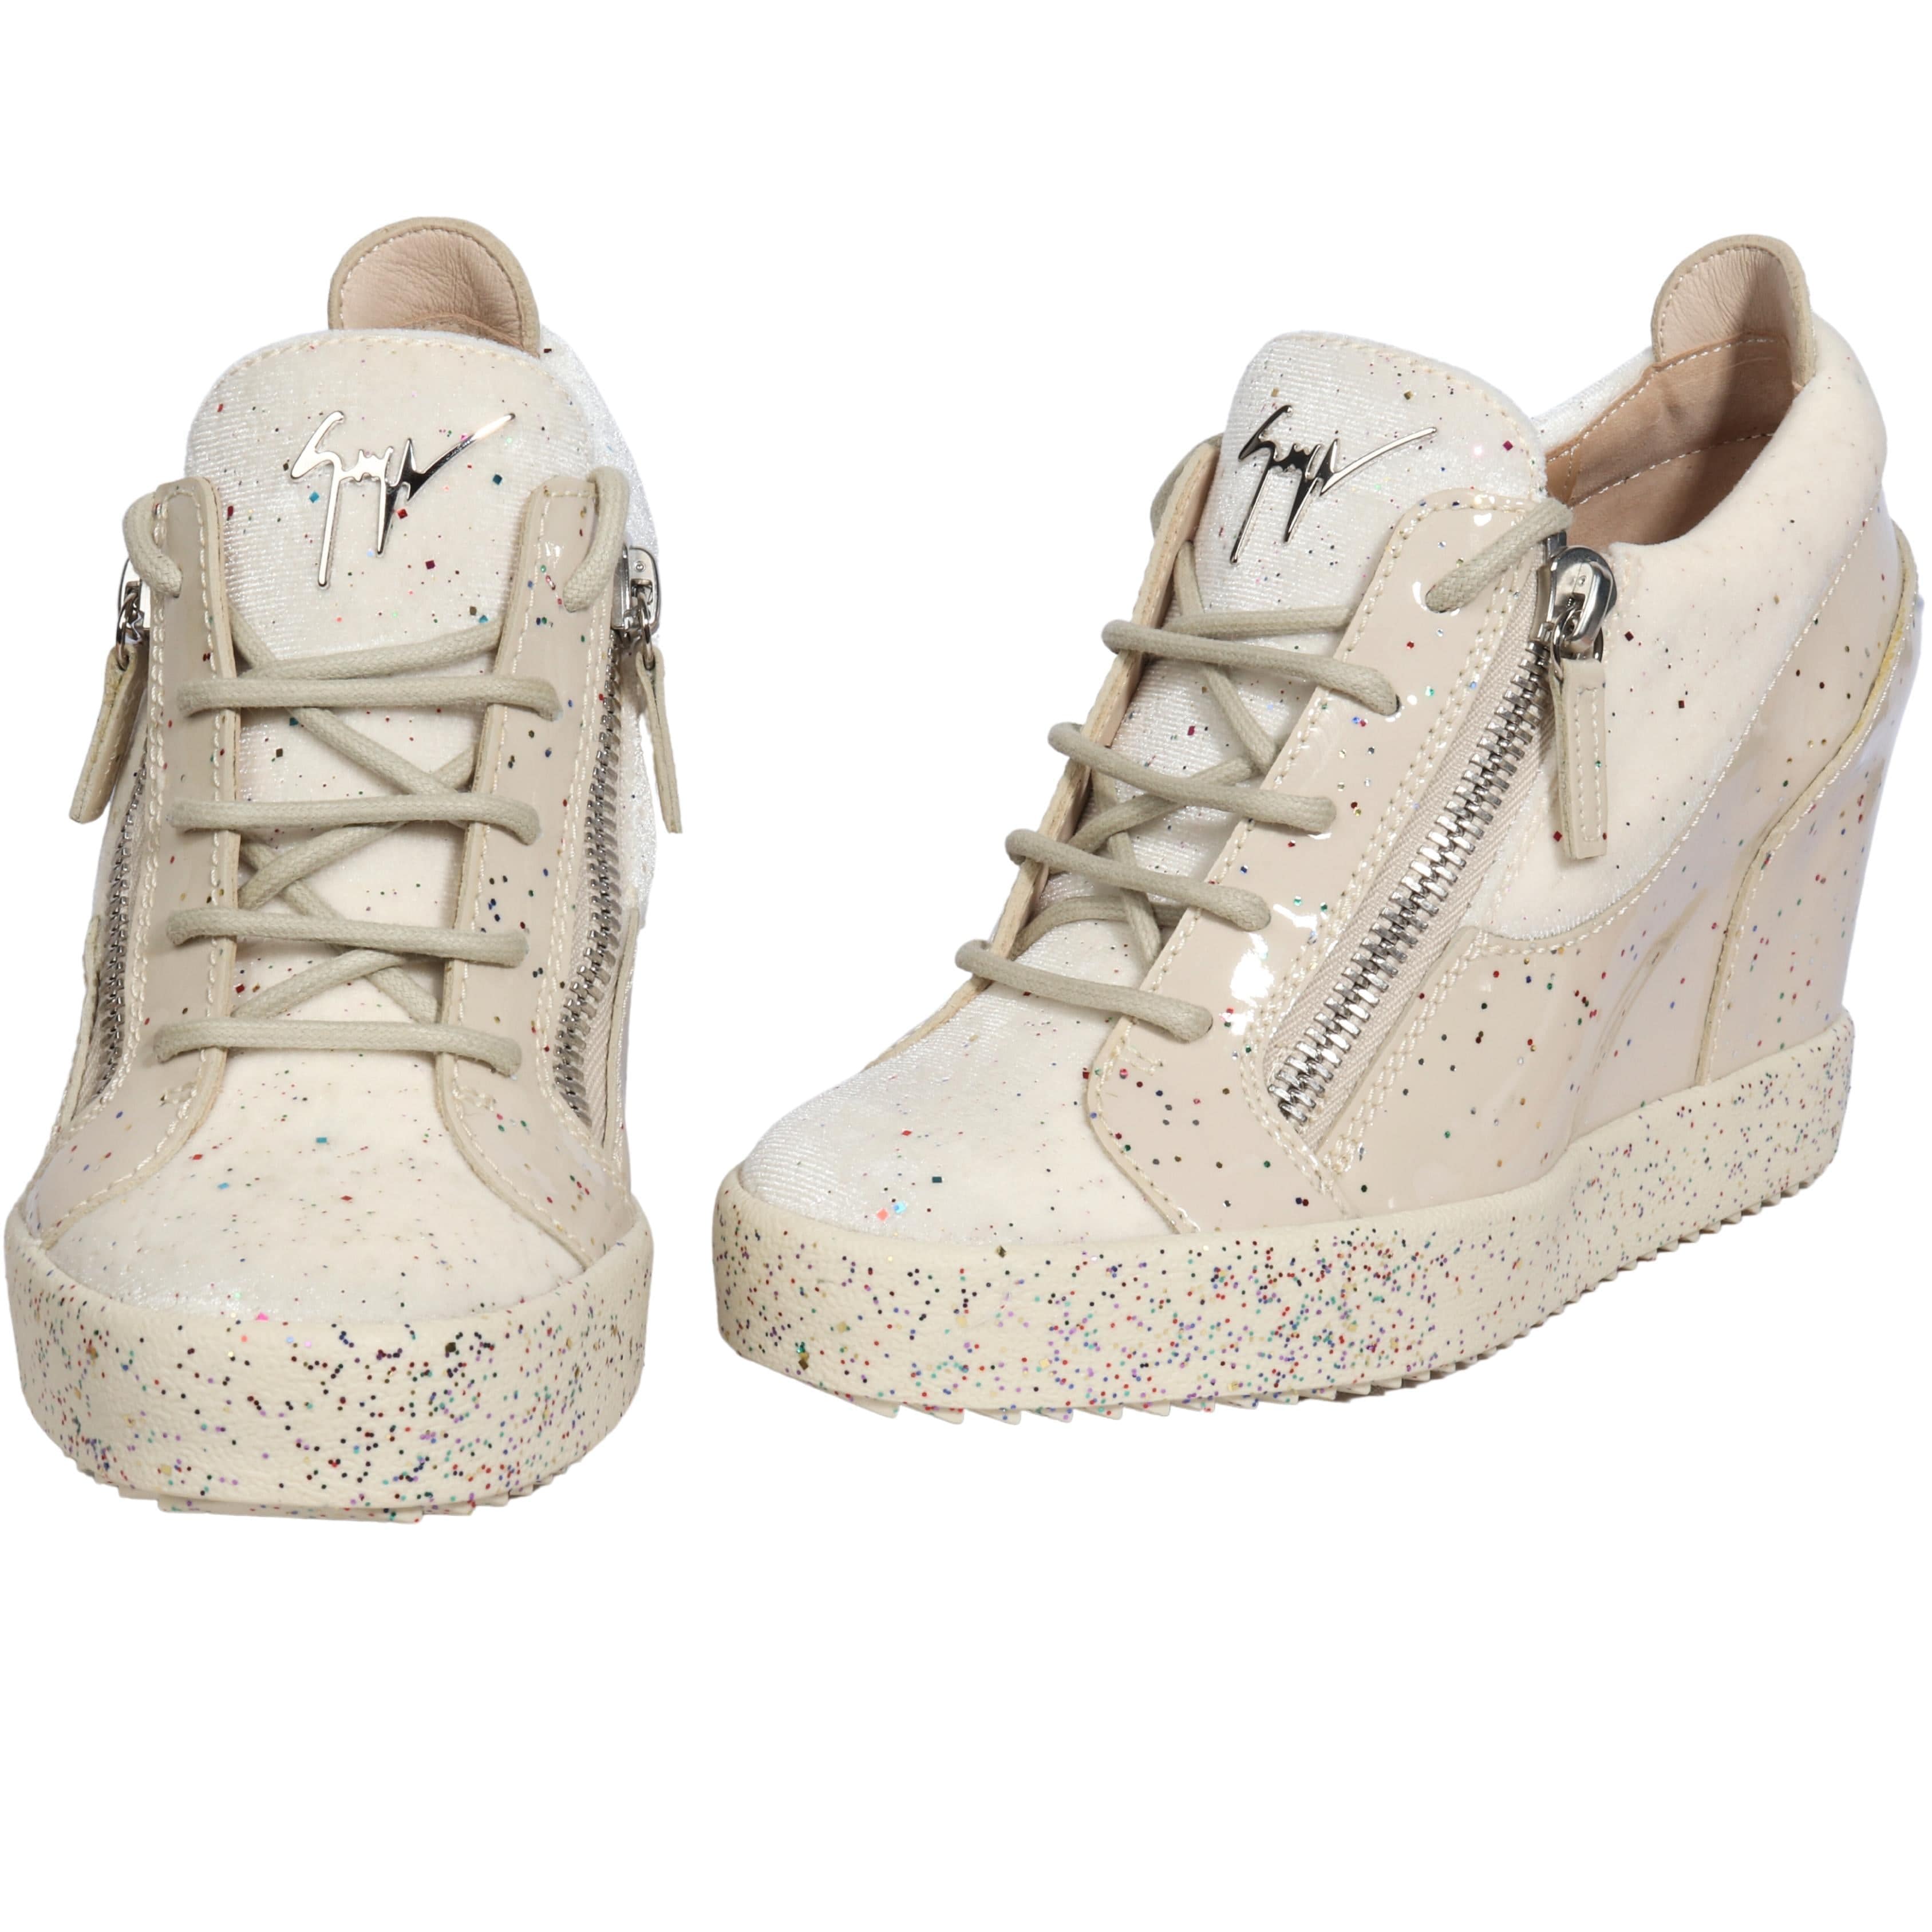 Buy Giuseppe Zanotti Women's RW70005 Sneaker, Geranium, 6 B US at Amazon.in